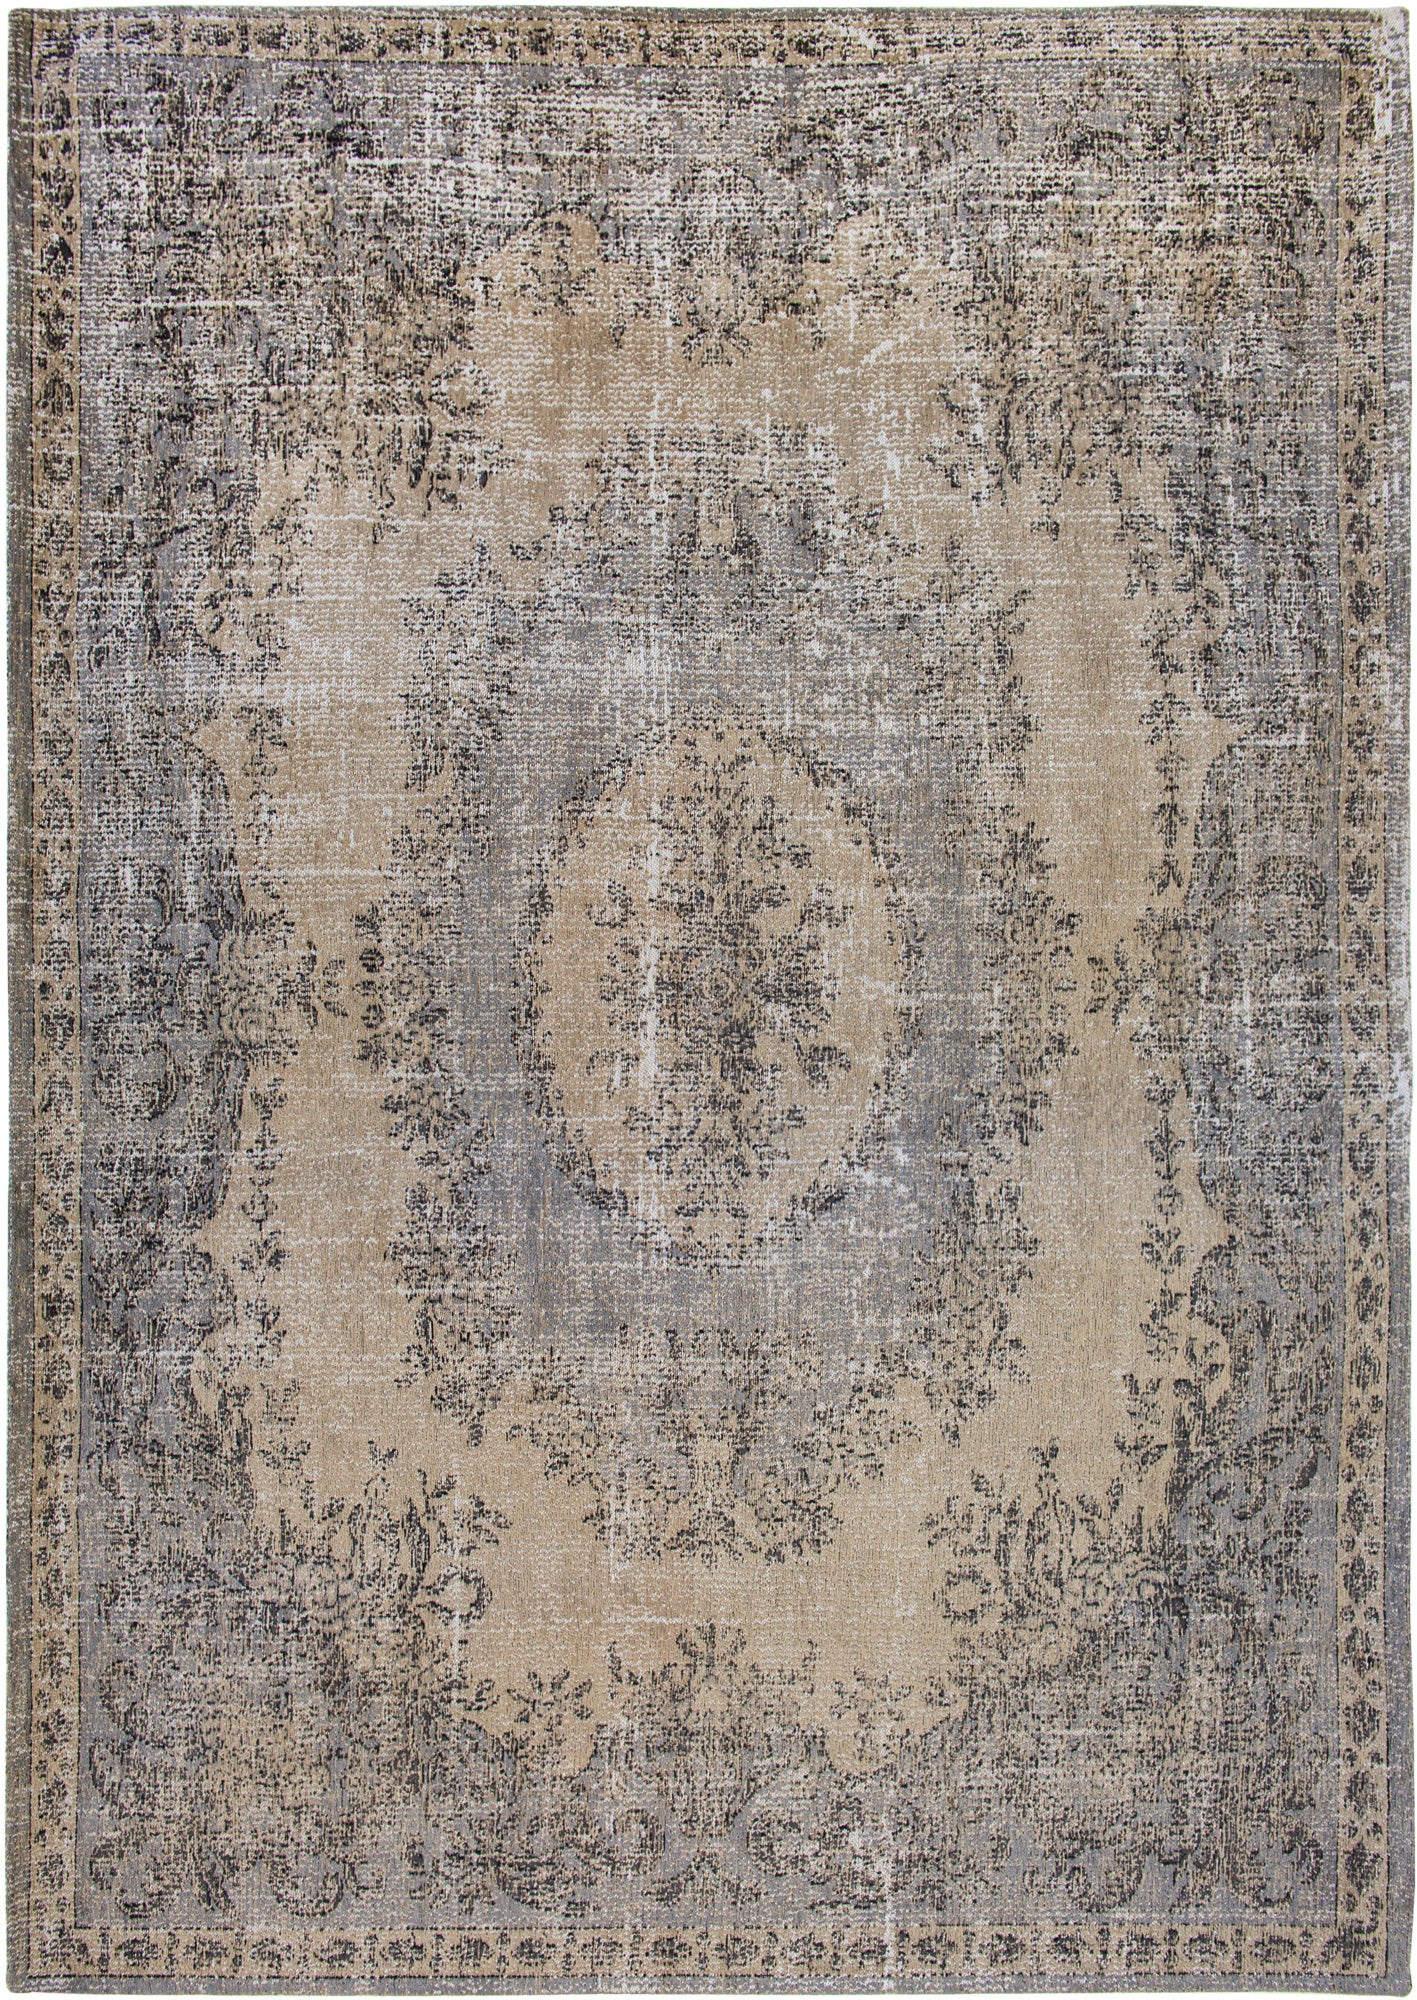 DAM-301: Jacquard carpet